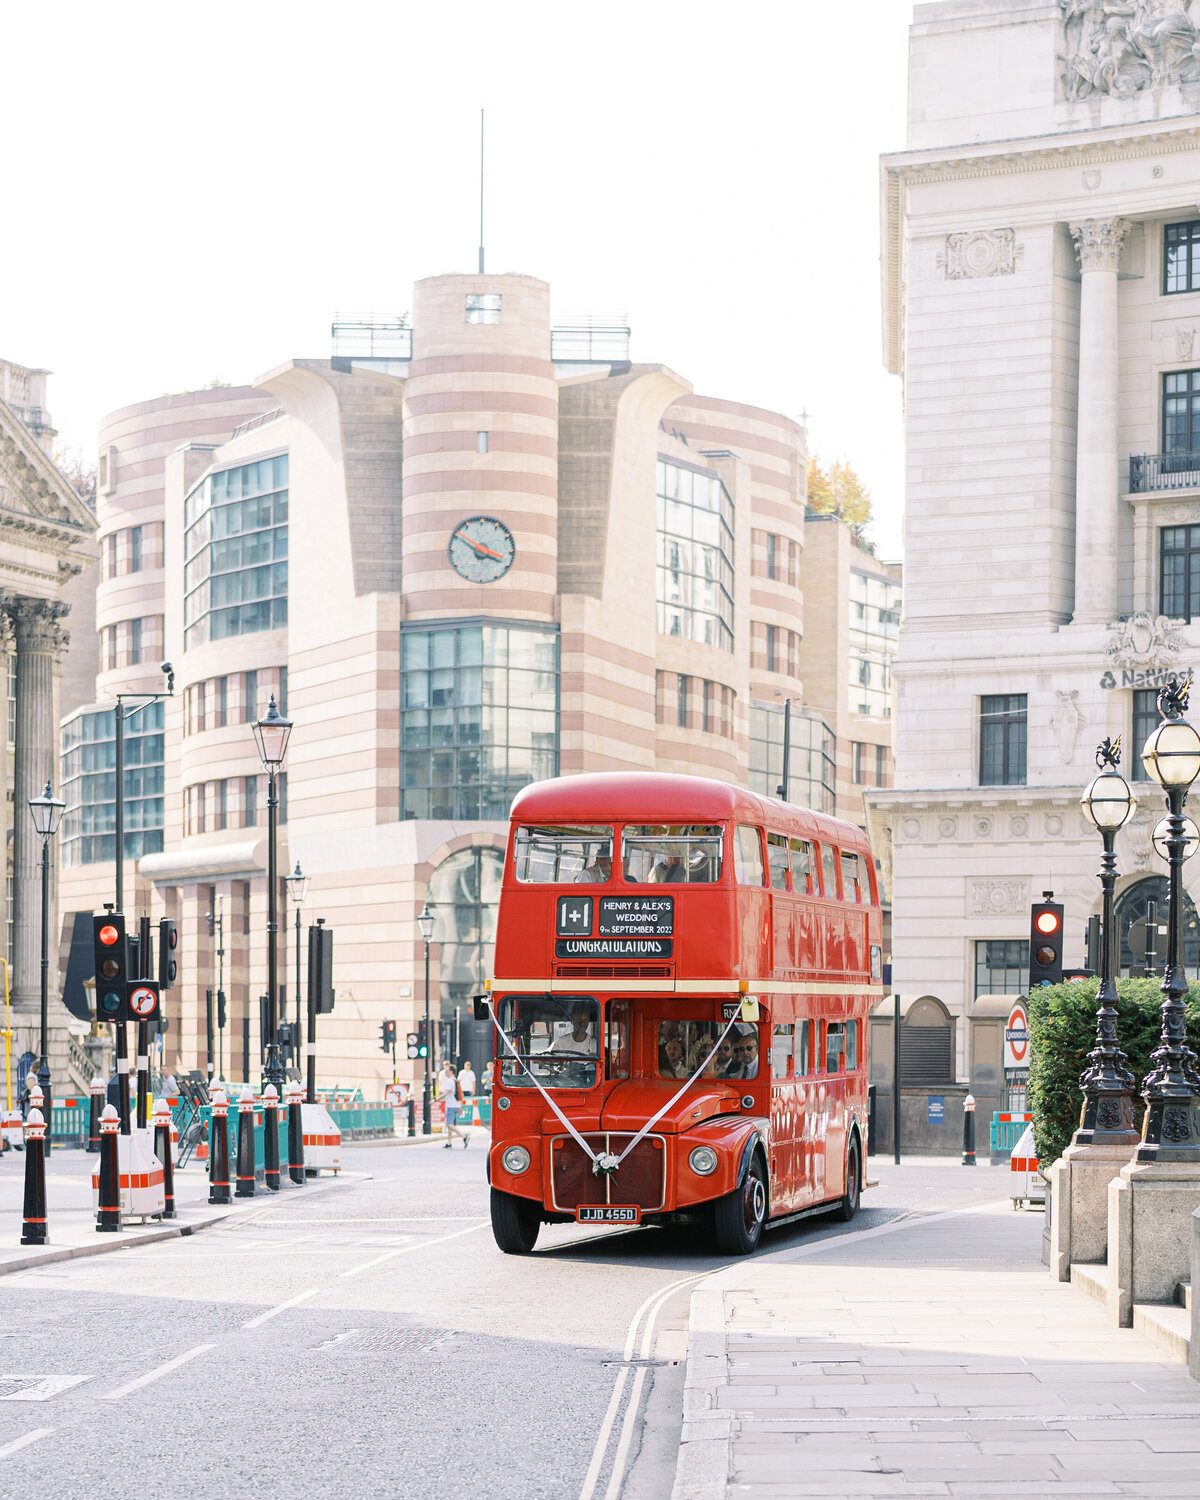 Classic London bus as wedding transport